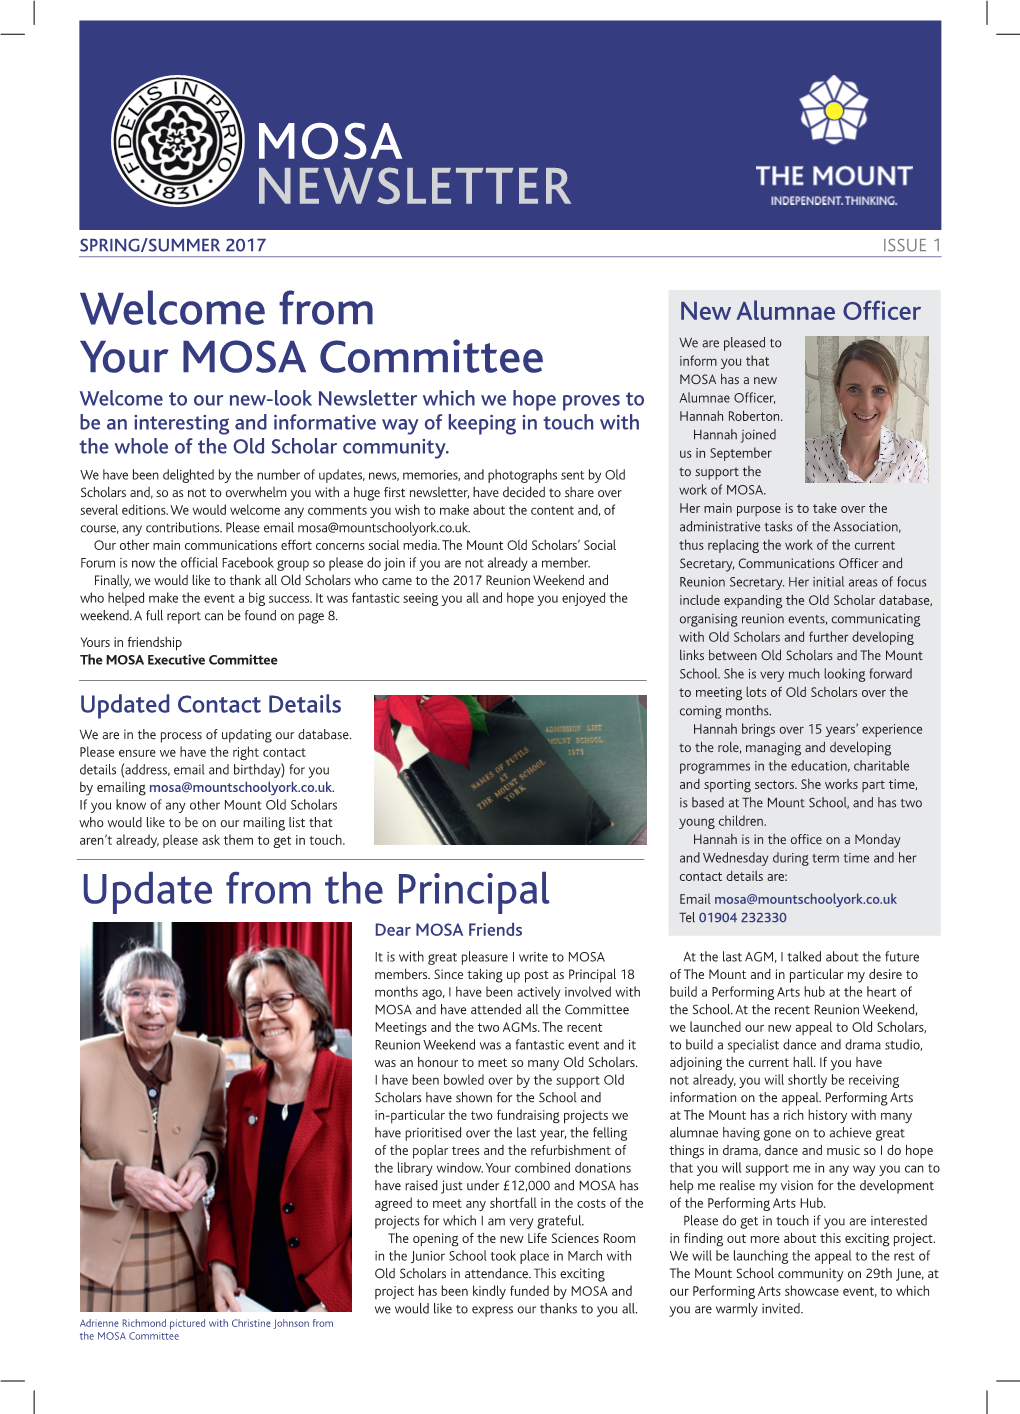 MOSA Newsletter